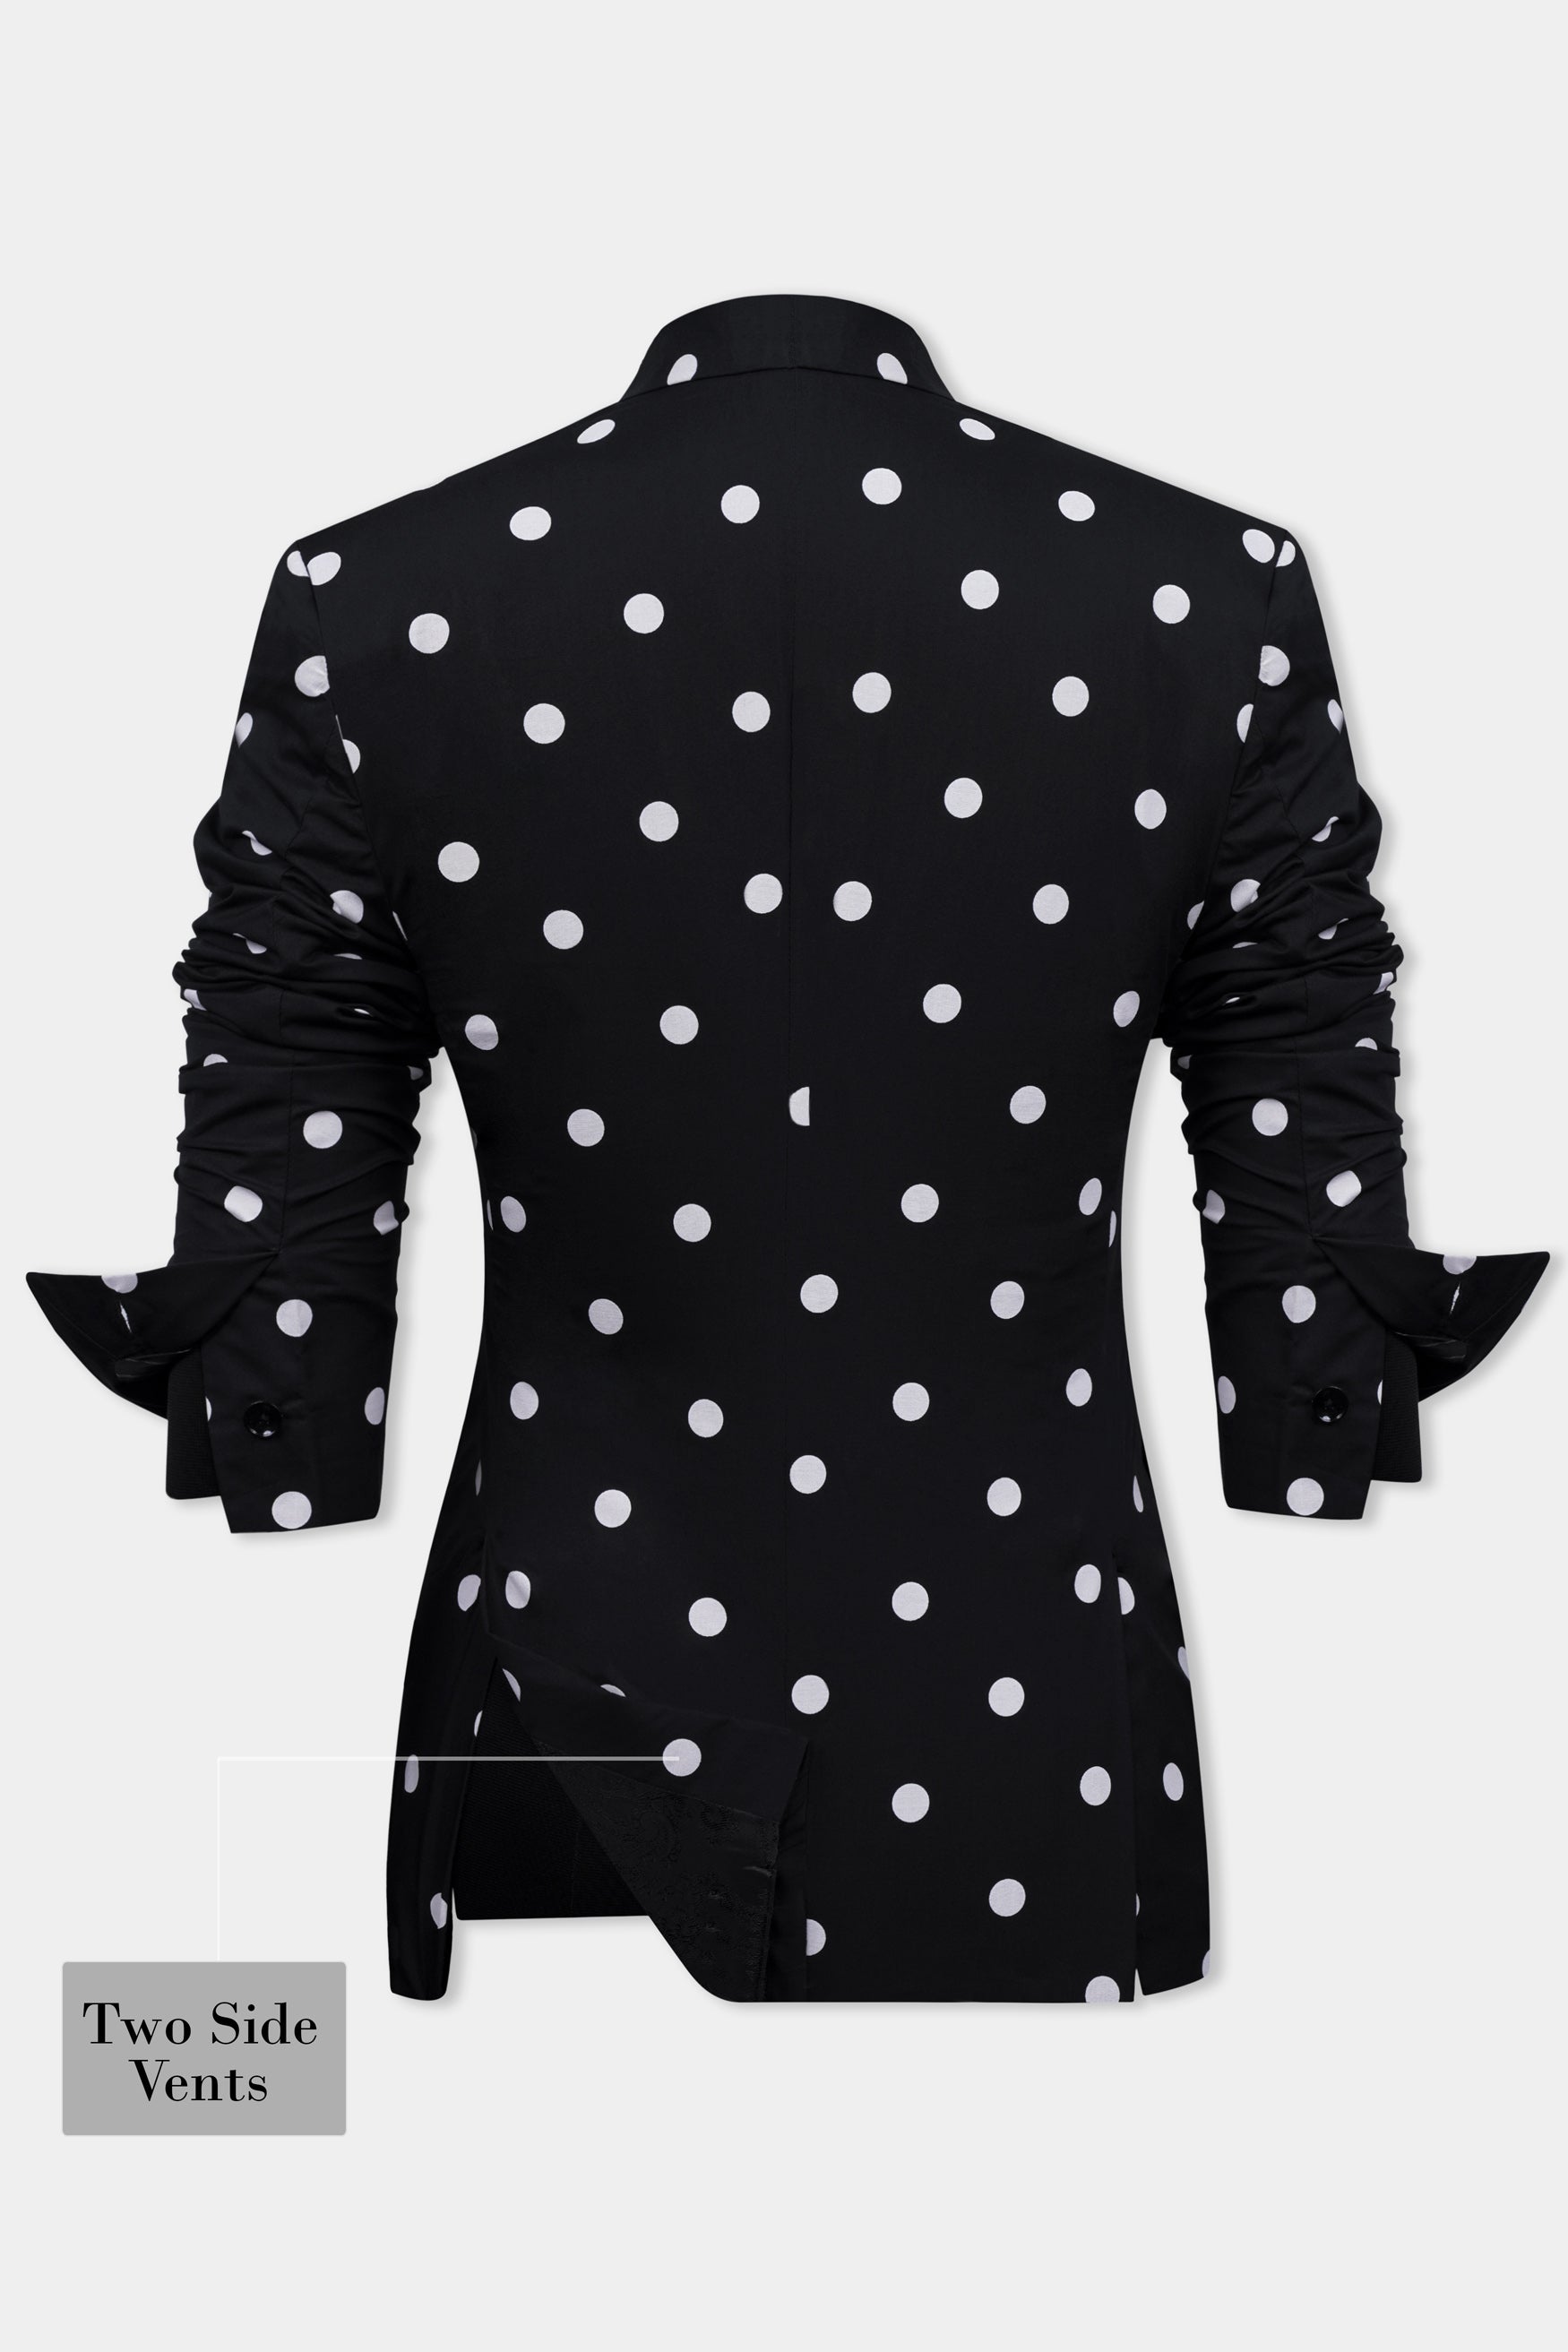 Jade Black and Bright White Polka Dotted Premium Cotton Women’s Tuxedo Blazer